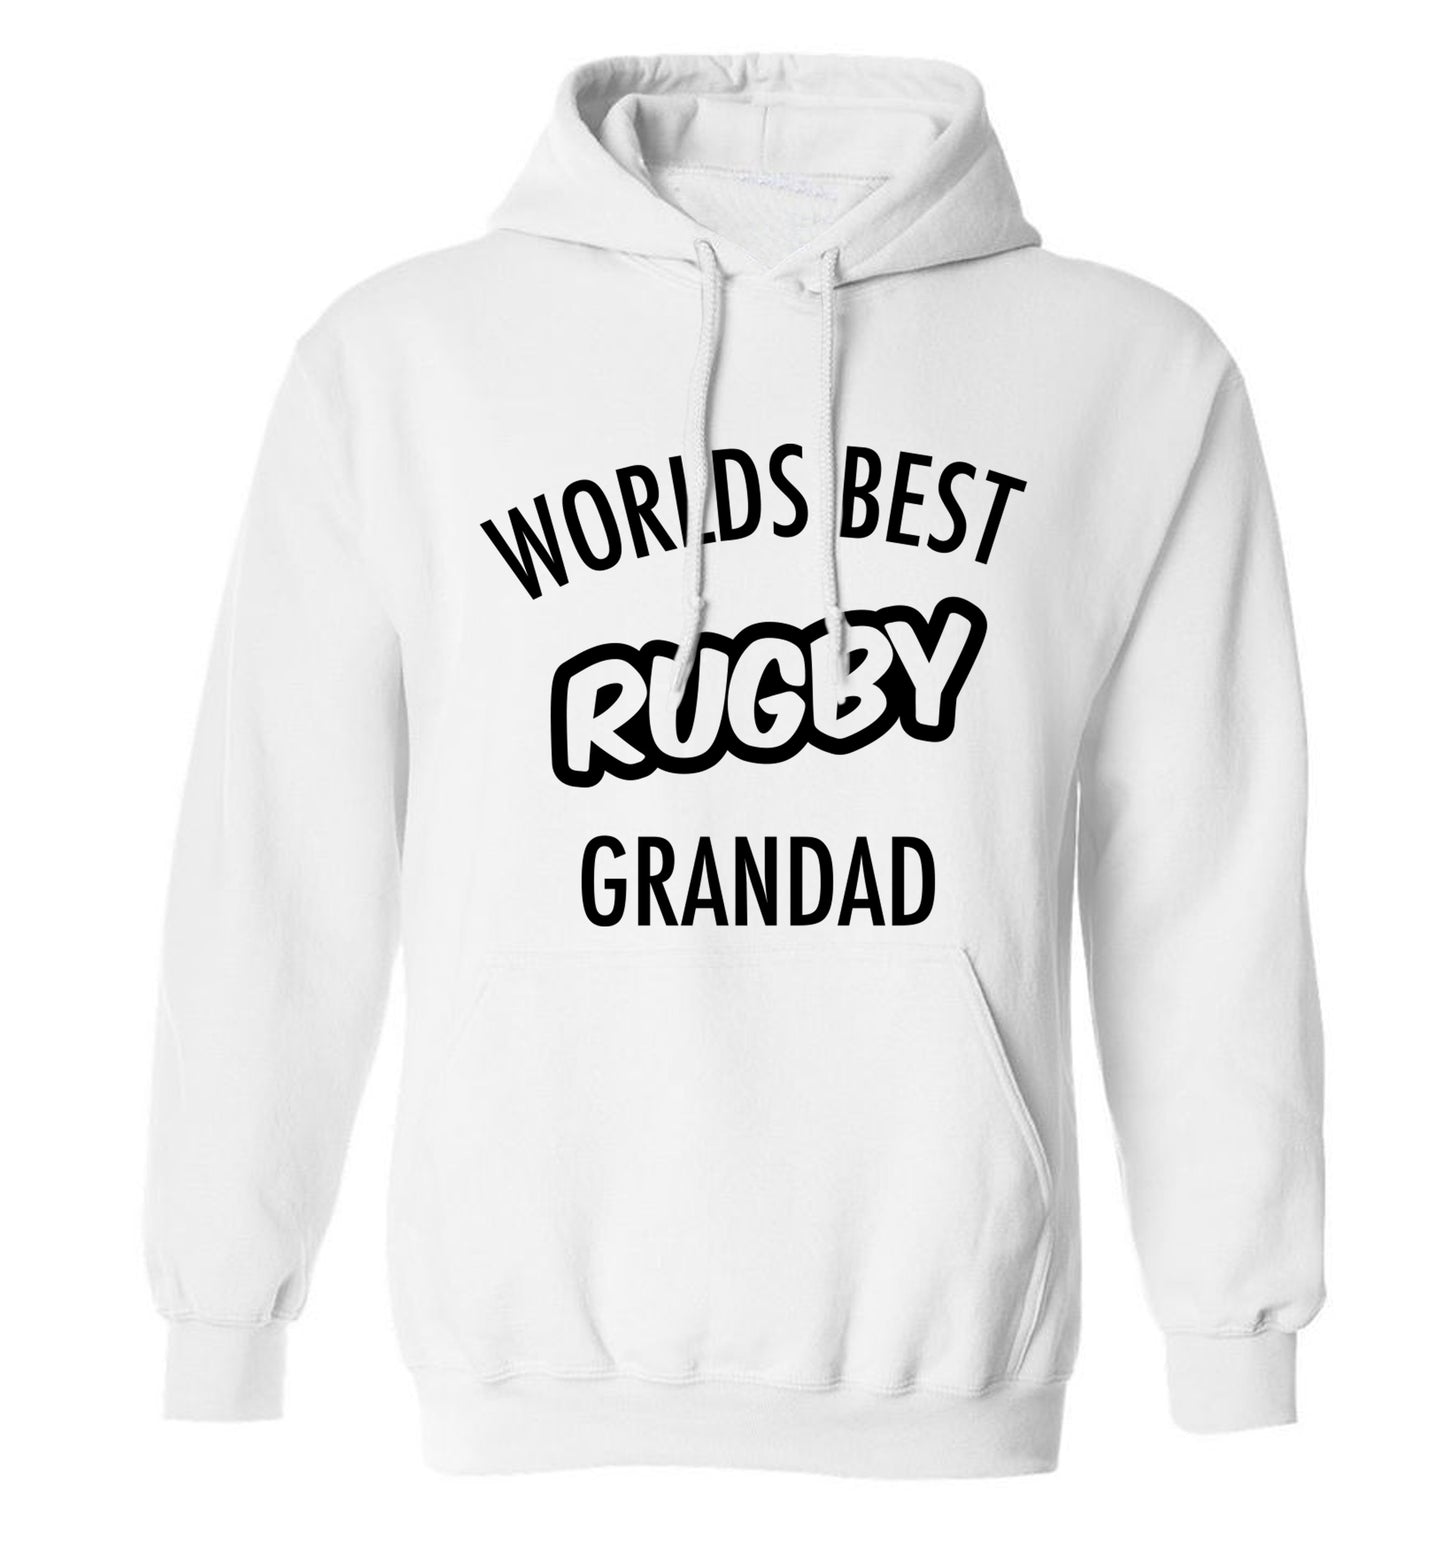 Worlds best rugby grandad adults unisex white hoodie 2XL